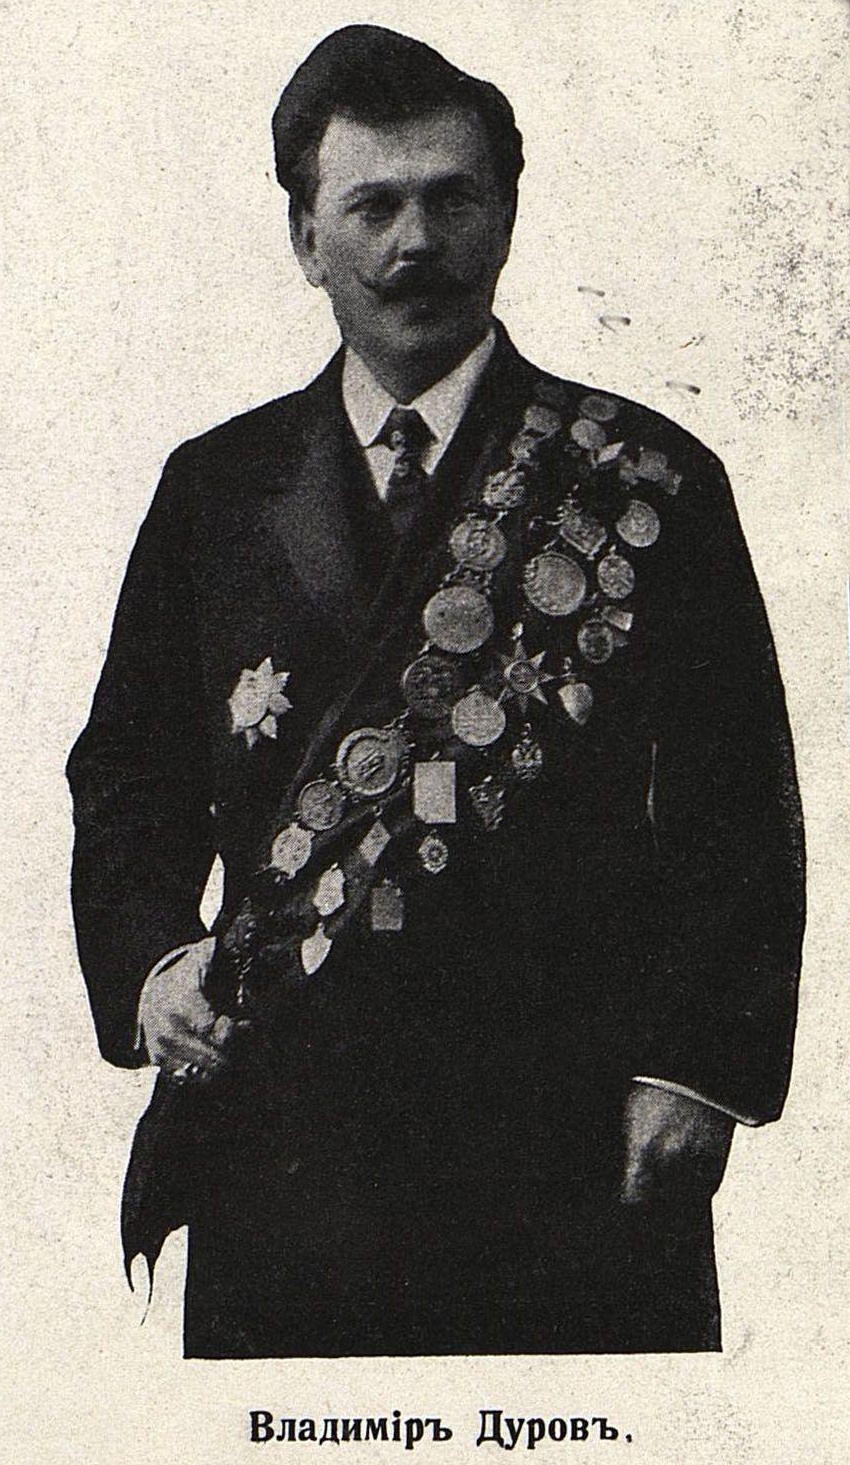 Дуров Владимир Леонидович, 1910-1914 гг.